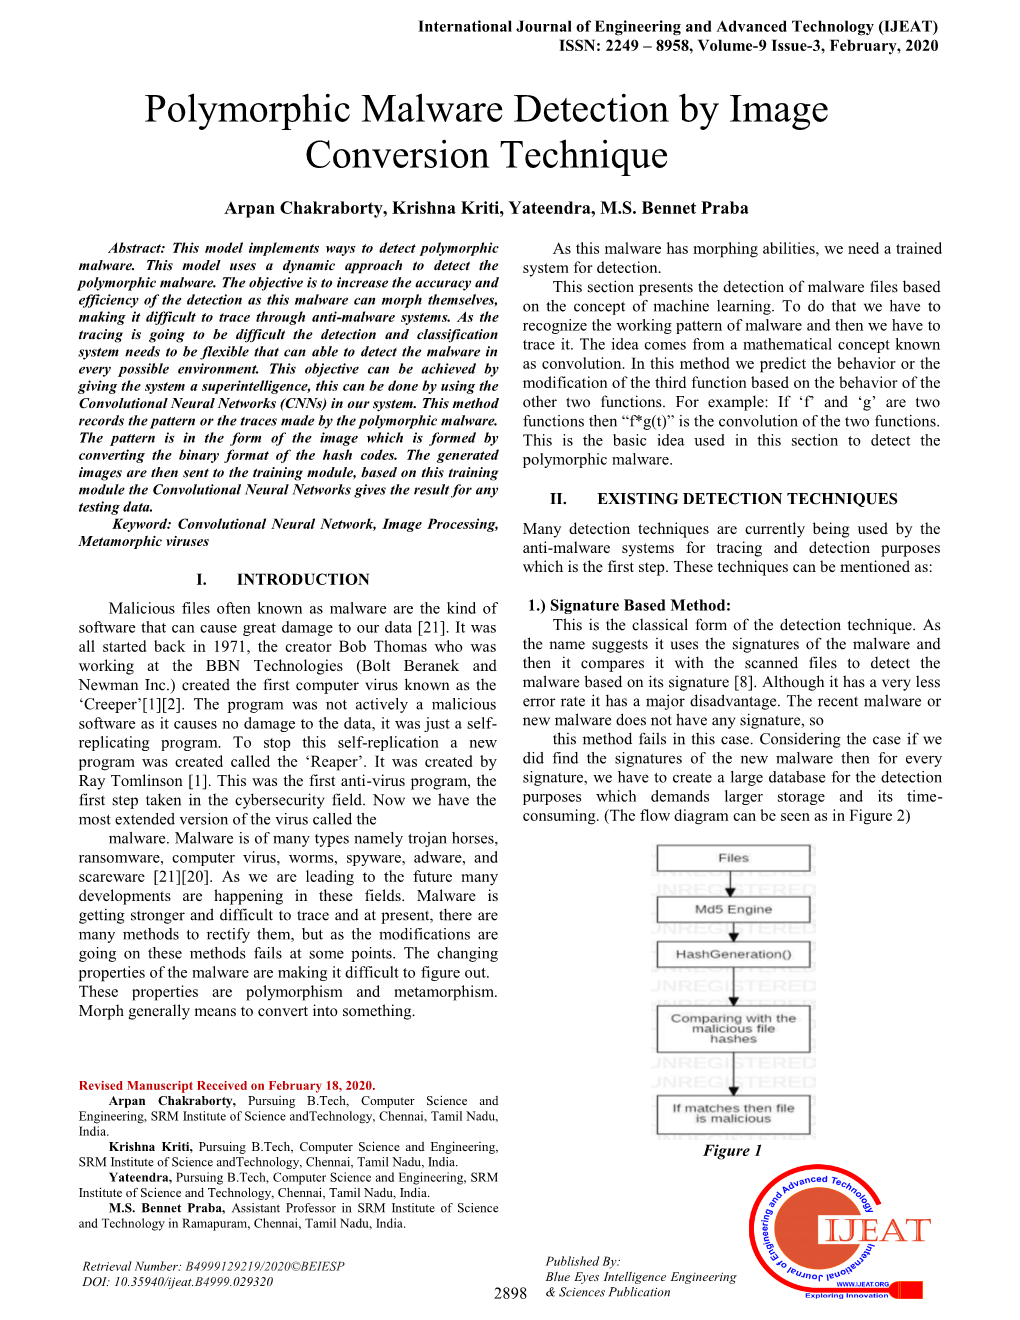 Polymorphic Malware Detection by Image Conversion Technique Arpan Chakraborty, Krishna Kriti, Yateendra, M.S